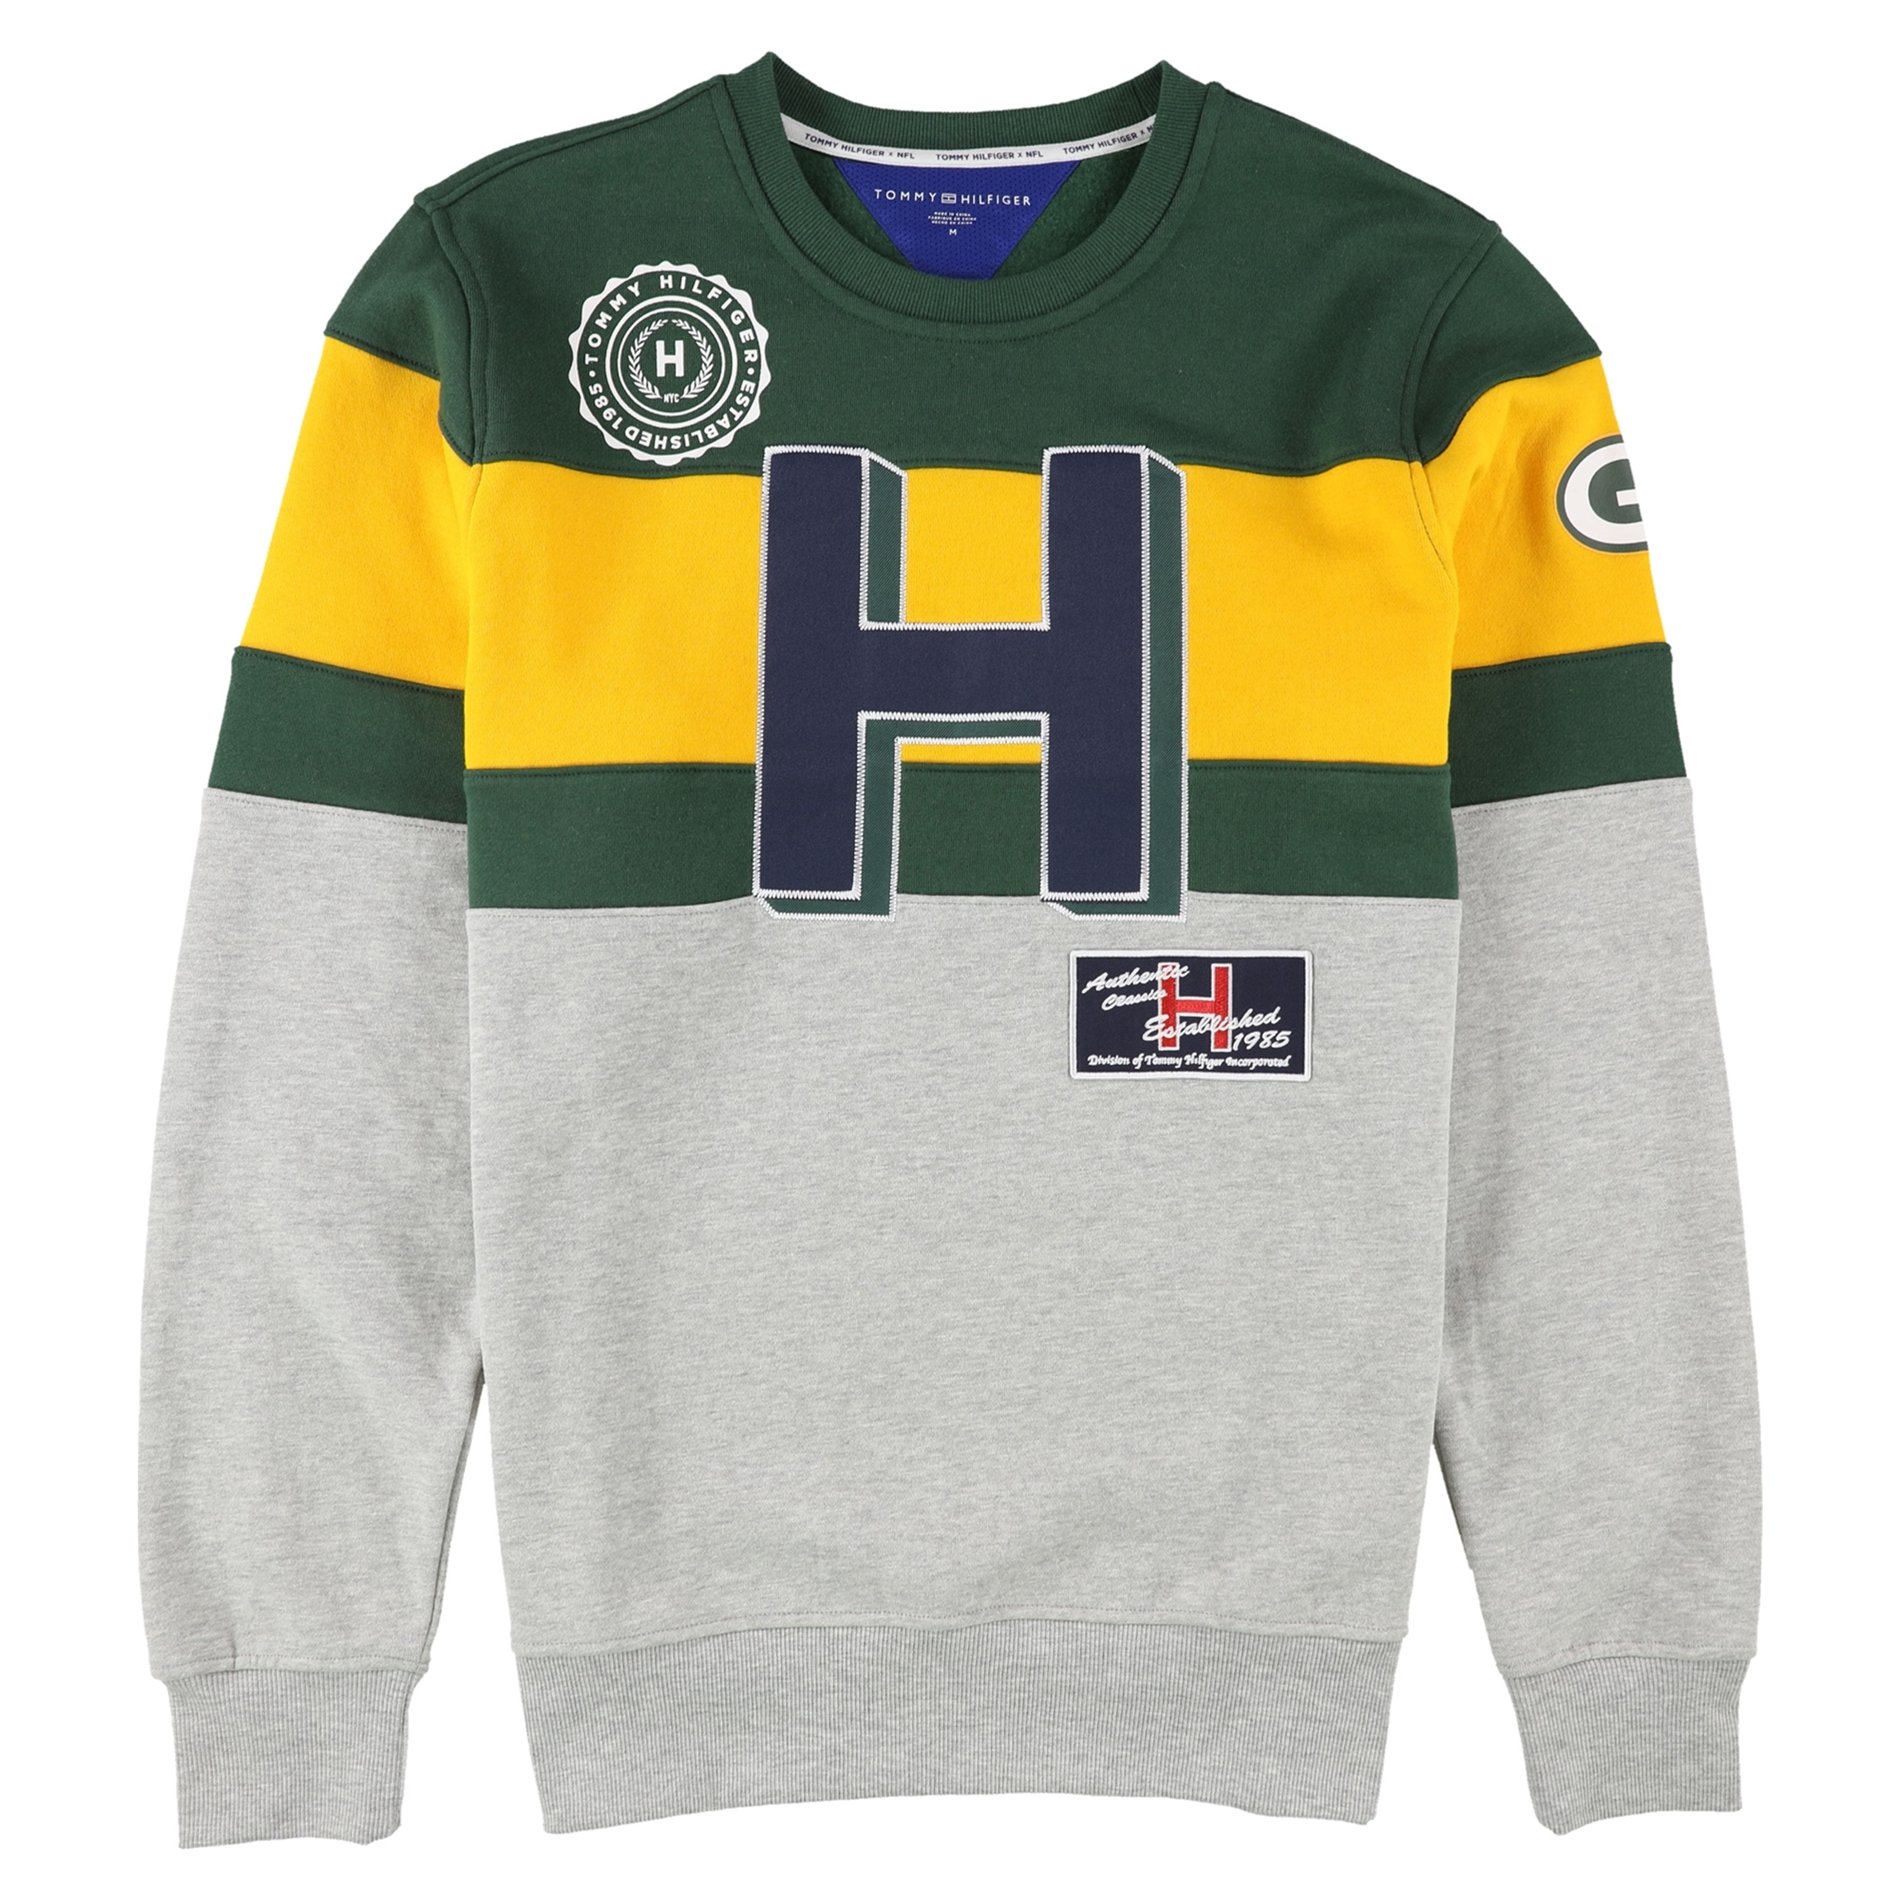 Tommy Hilfiger Mens Green Bay Packers Sweatshirt